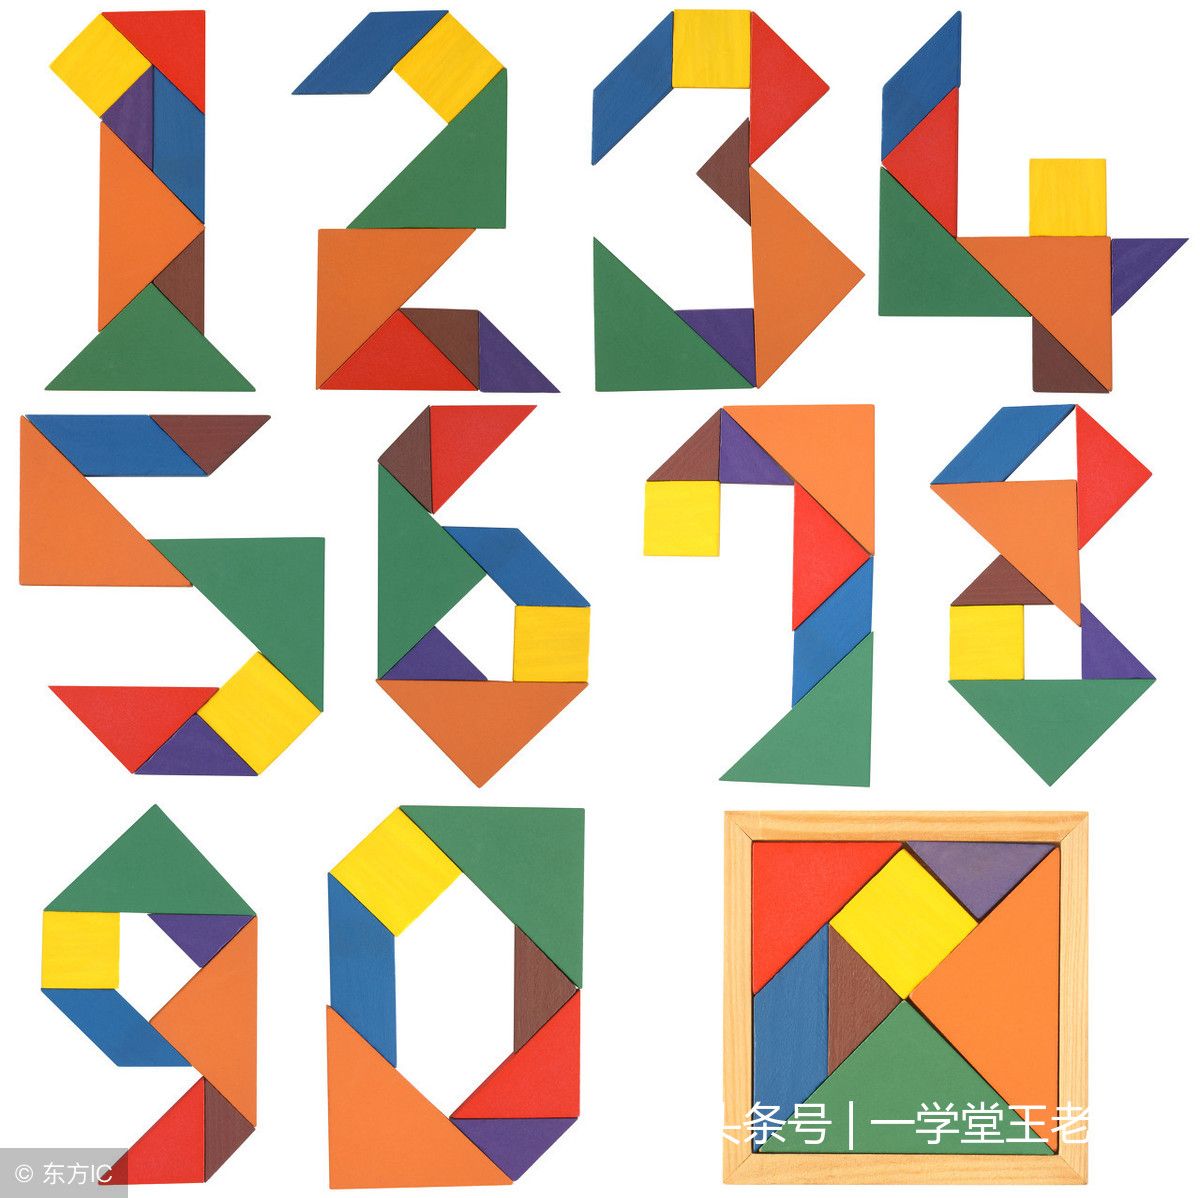 tangram game icons made with房子由七巧板拼图和关键拓展题型如下图